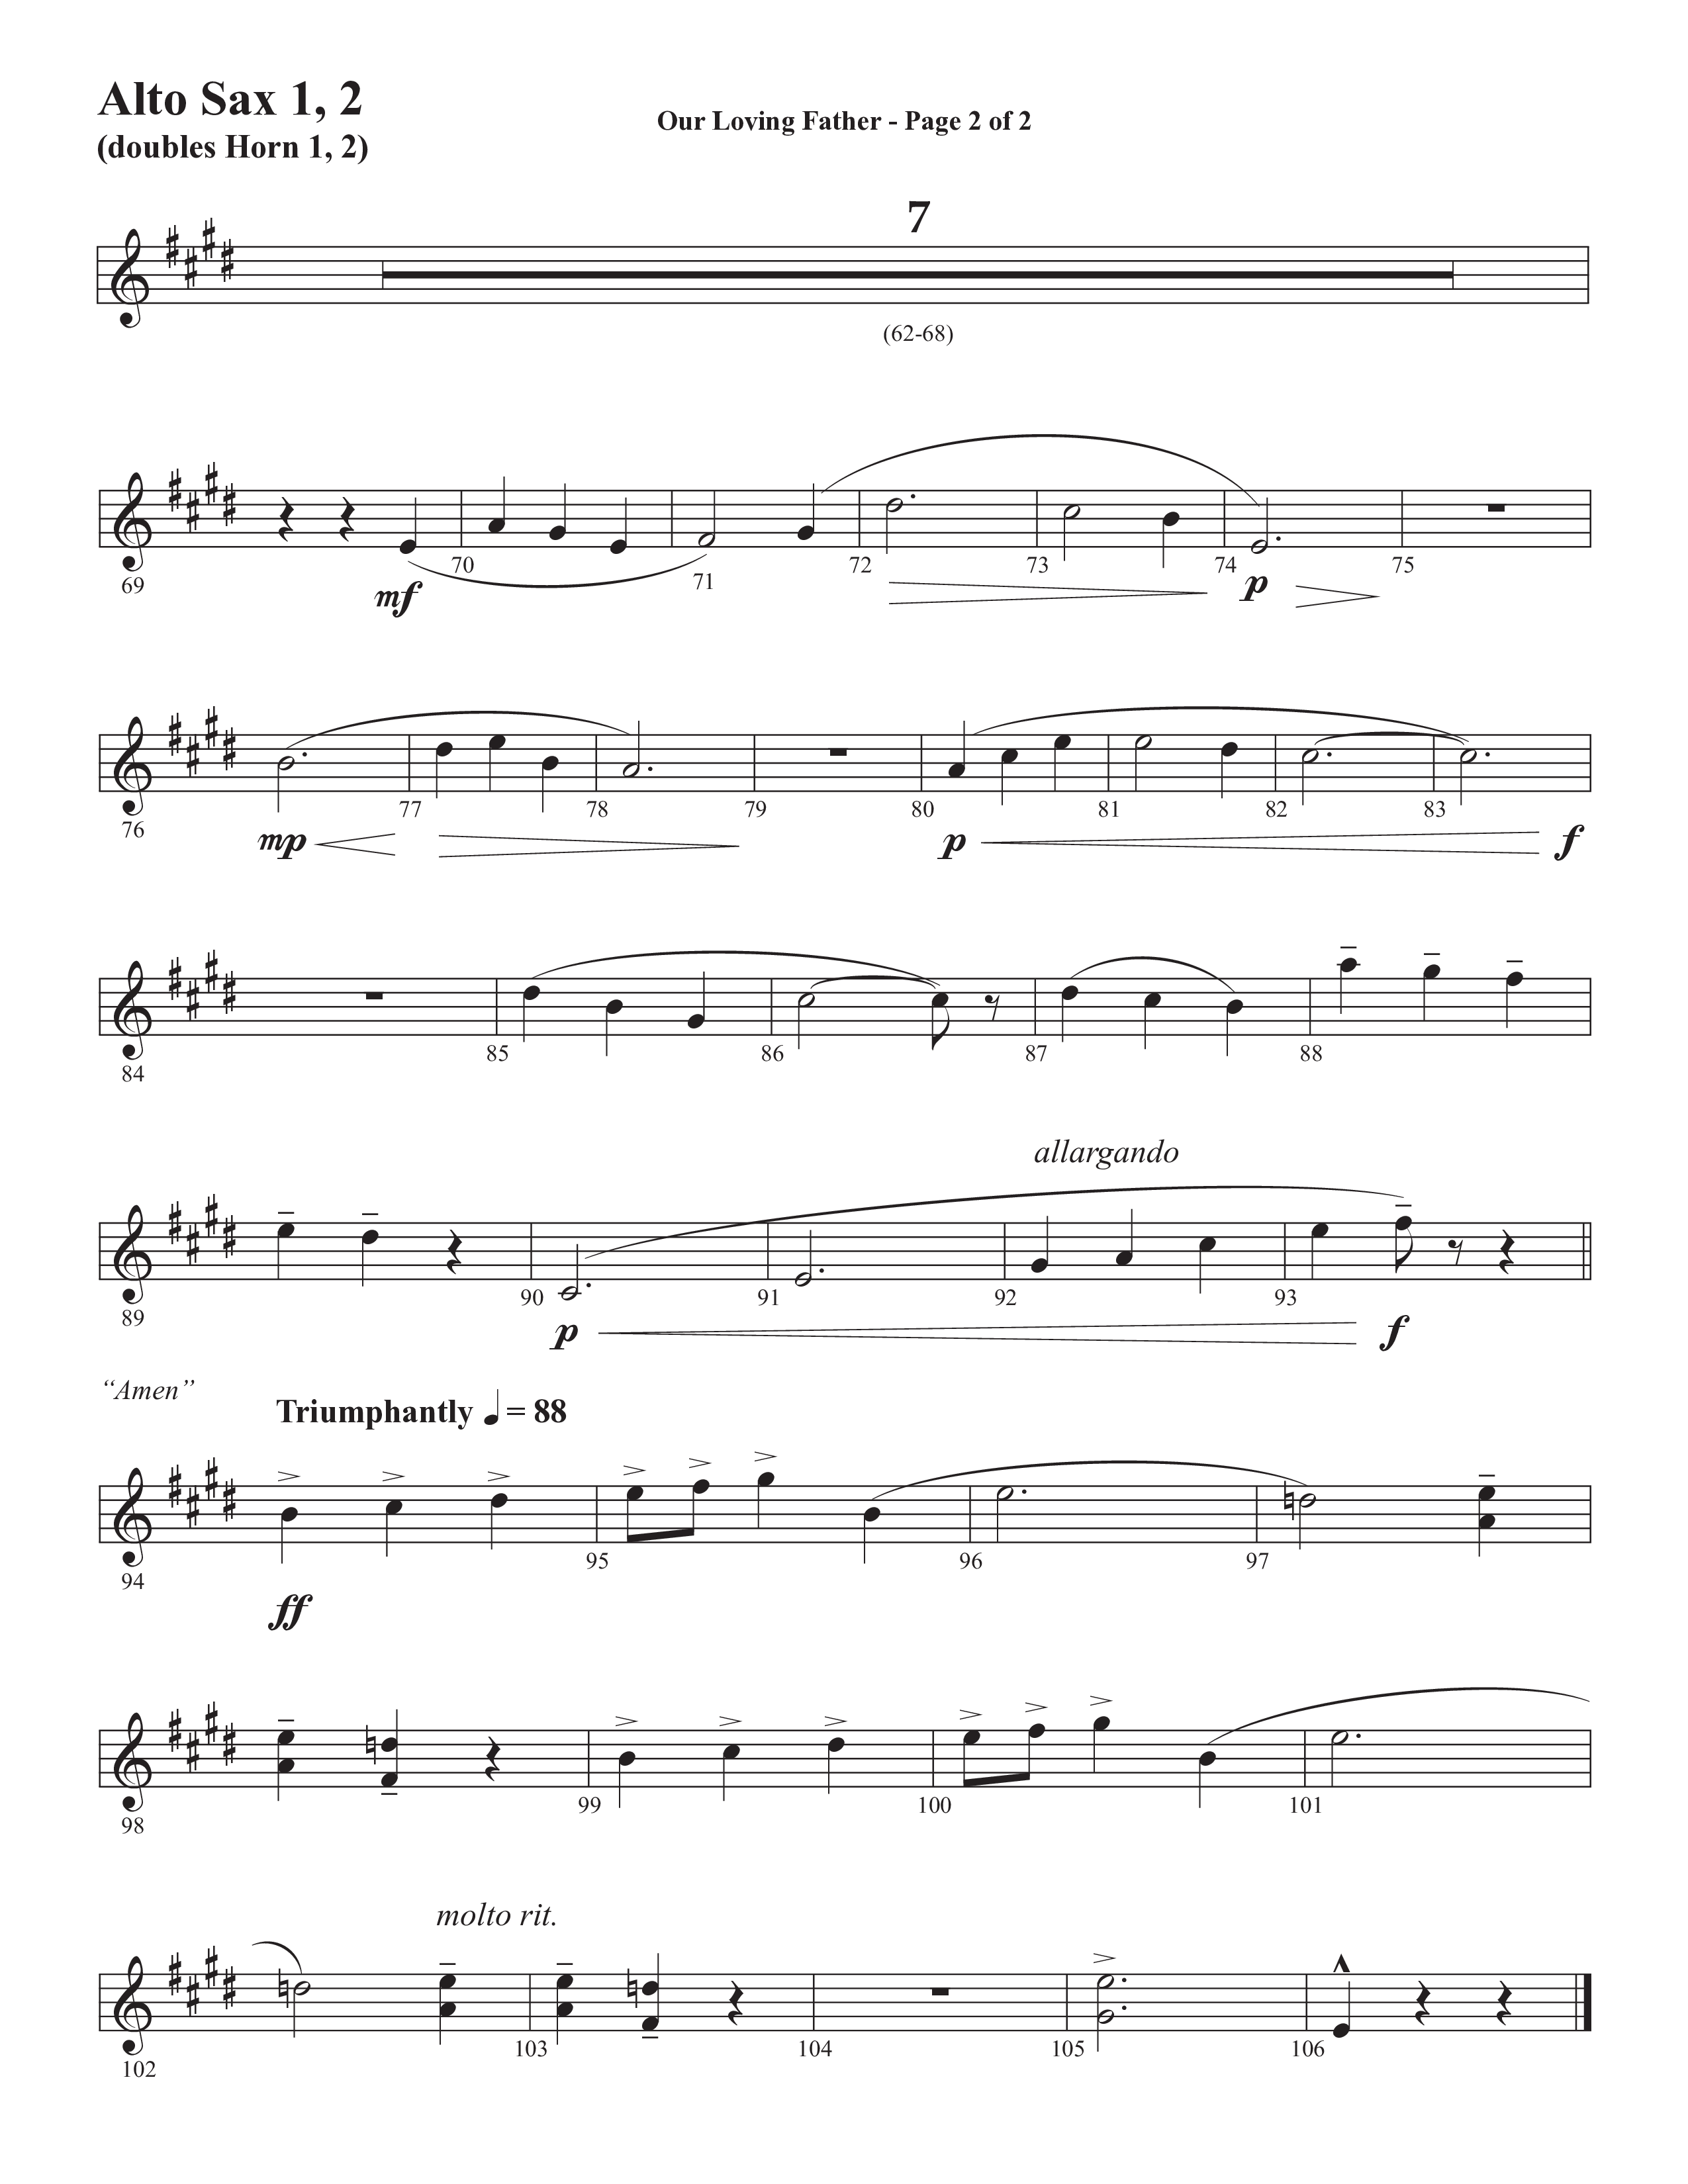 Our Loving Father (Choral Anthem SATB) Alto Sax 1/2 (Semsen Music / Arr. Phillip Keveren)